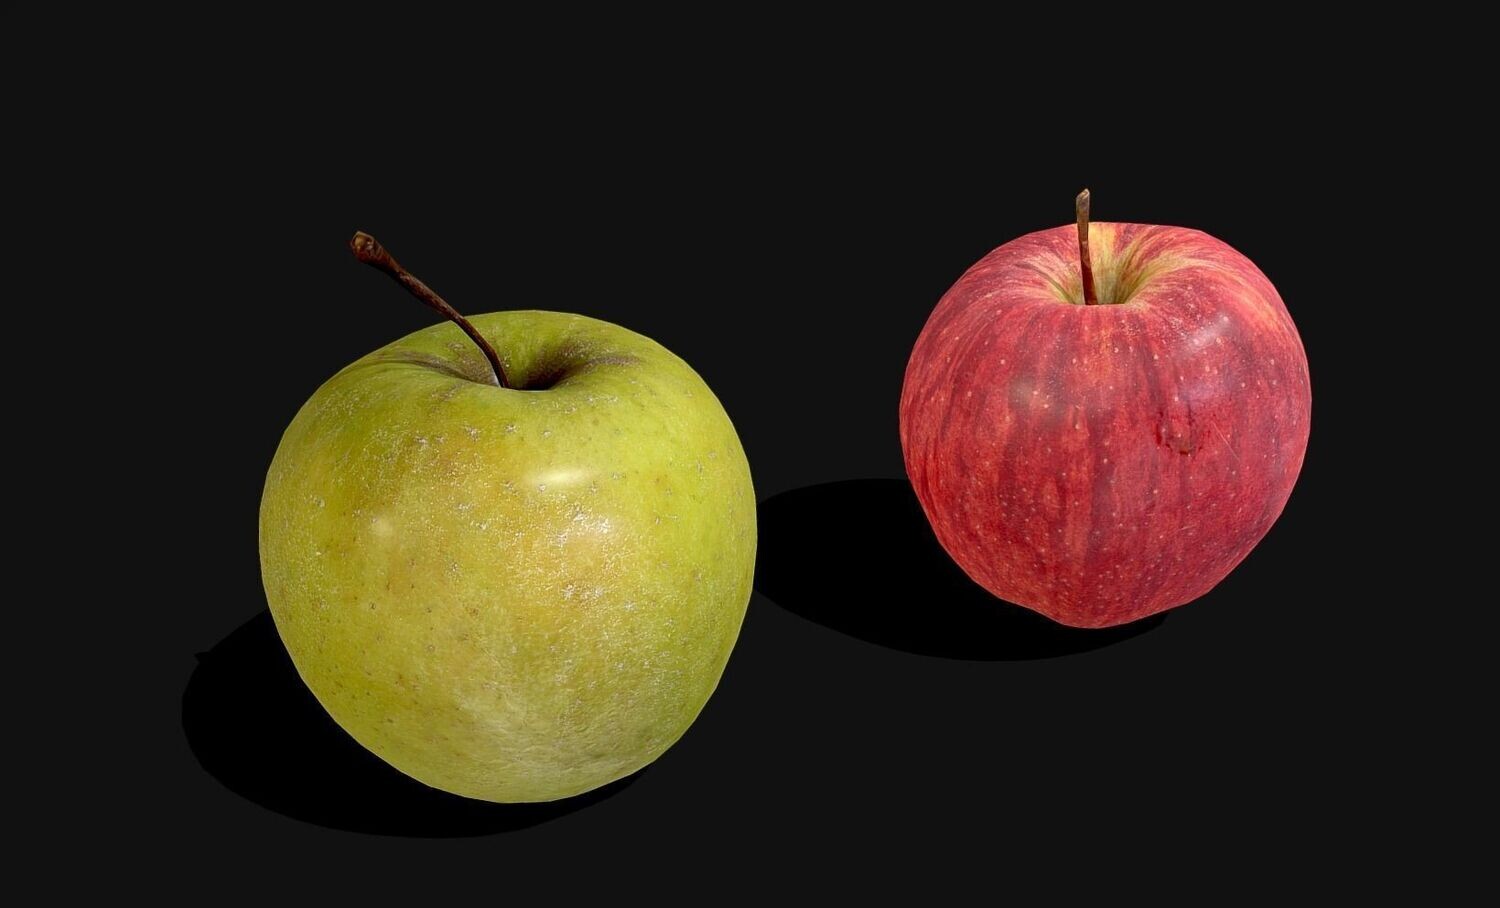 Apples - 2 Photoscaned models